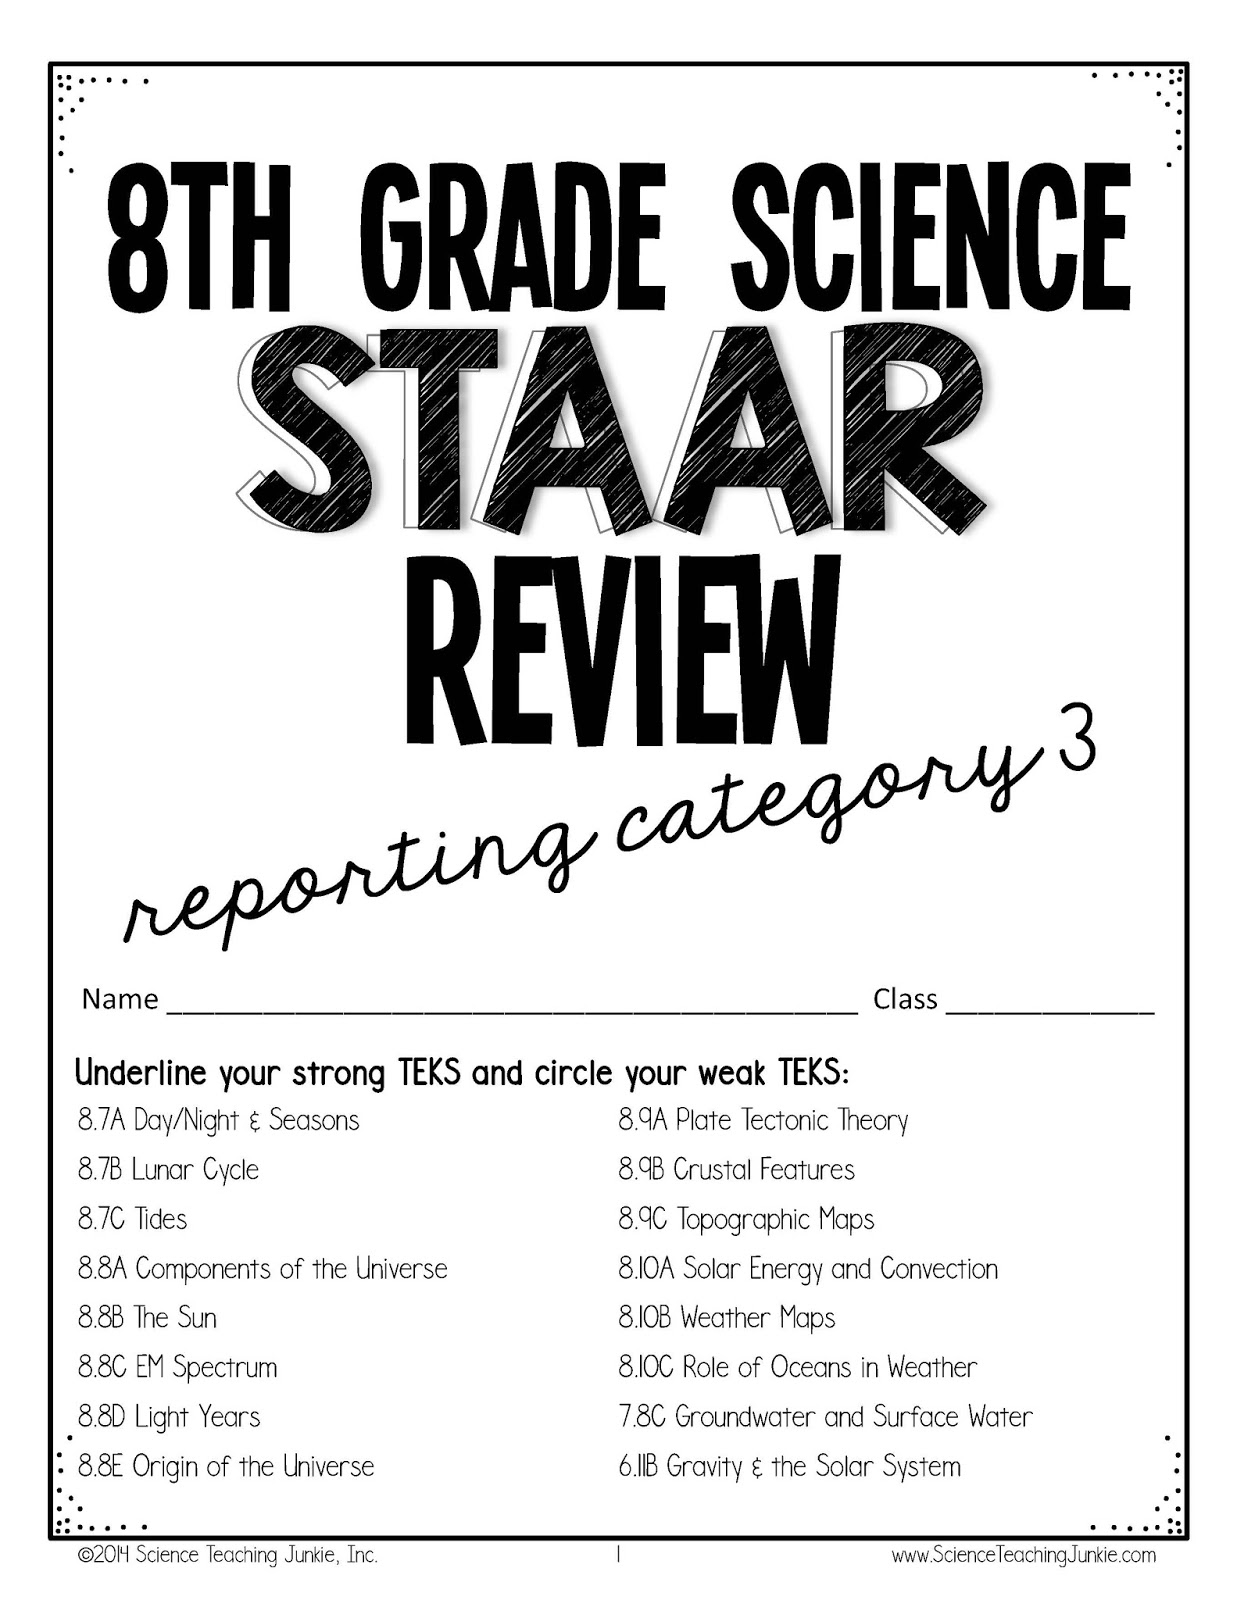 Science Teaching Junkie Inc 8th Grade Science STAAR Review